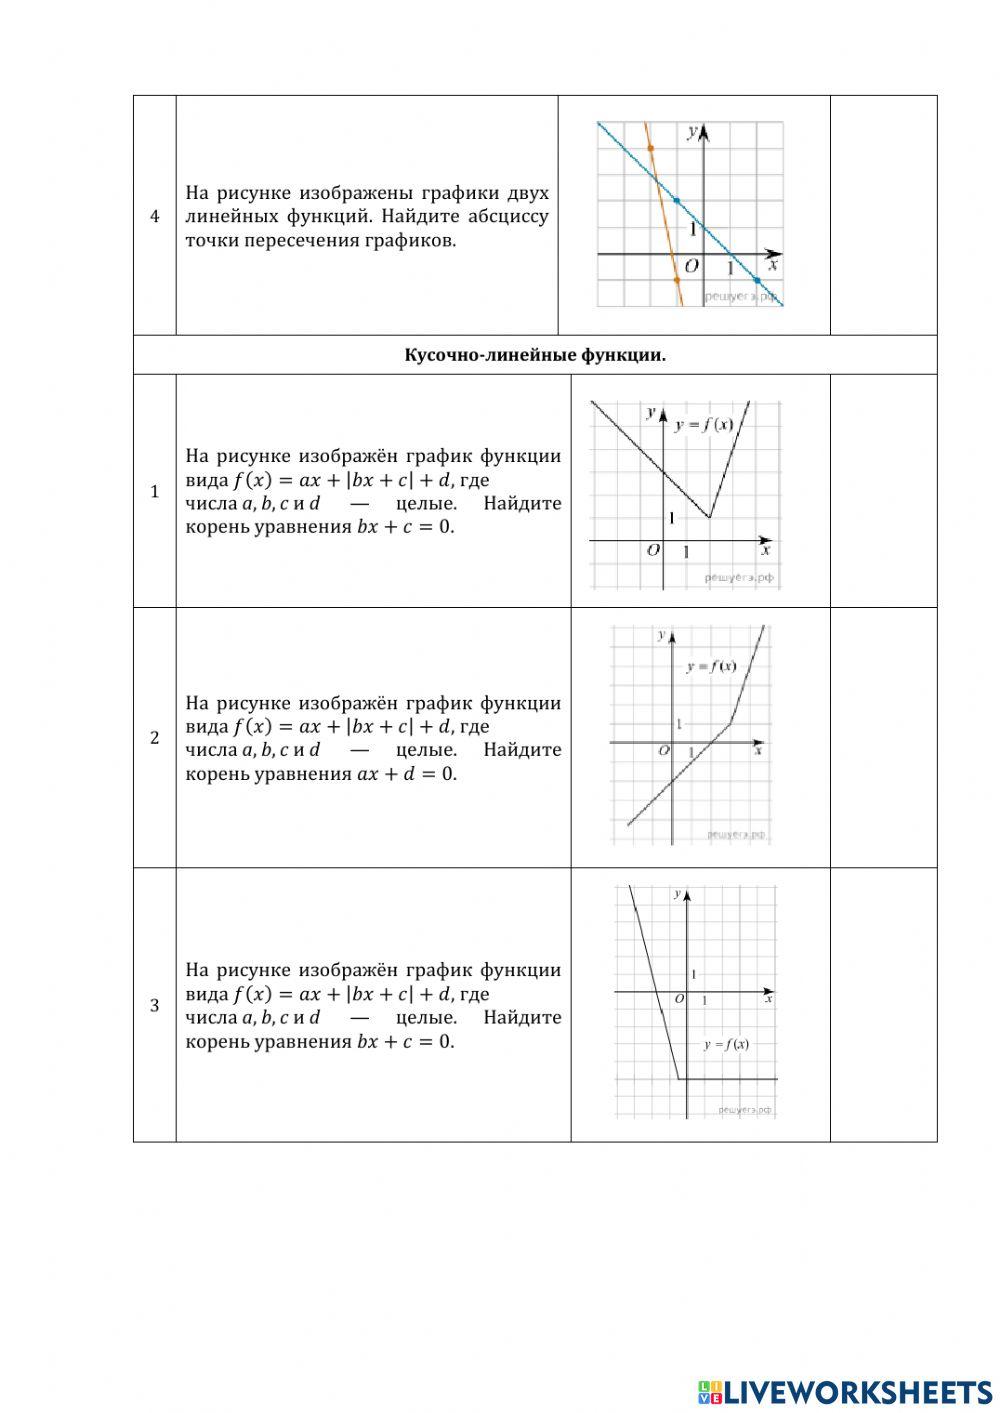 ДЗ 20: графики функций.